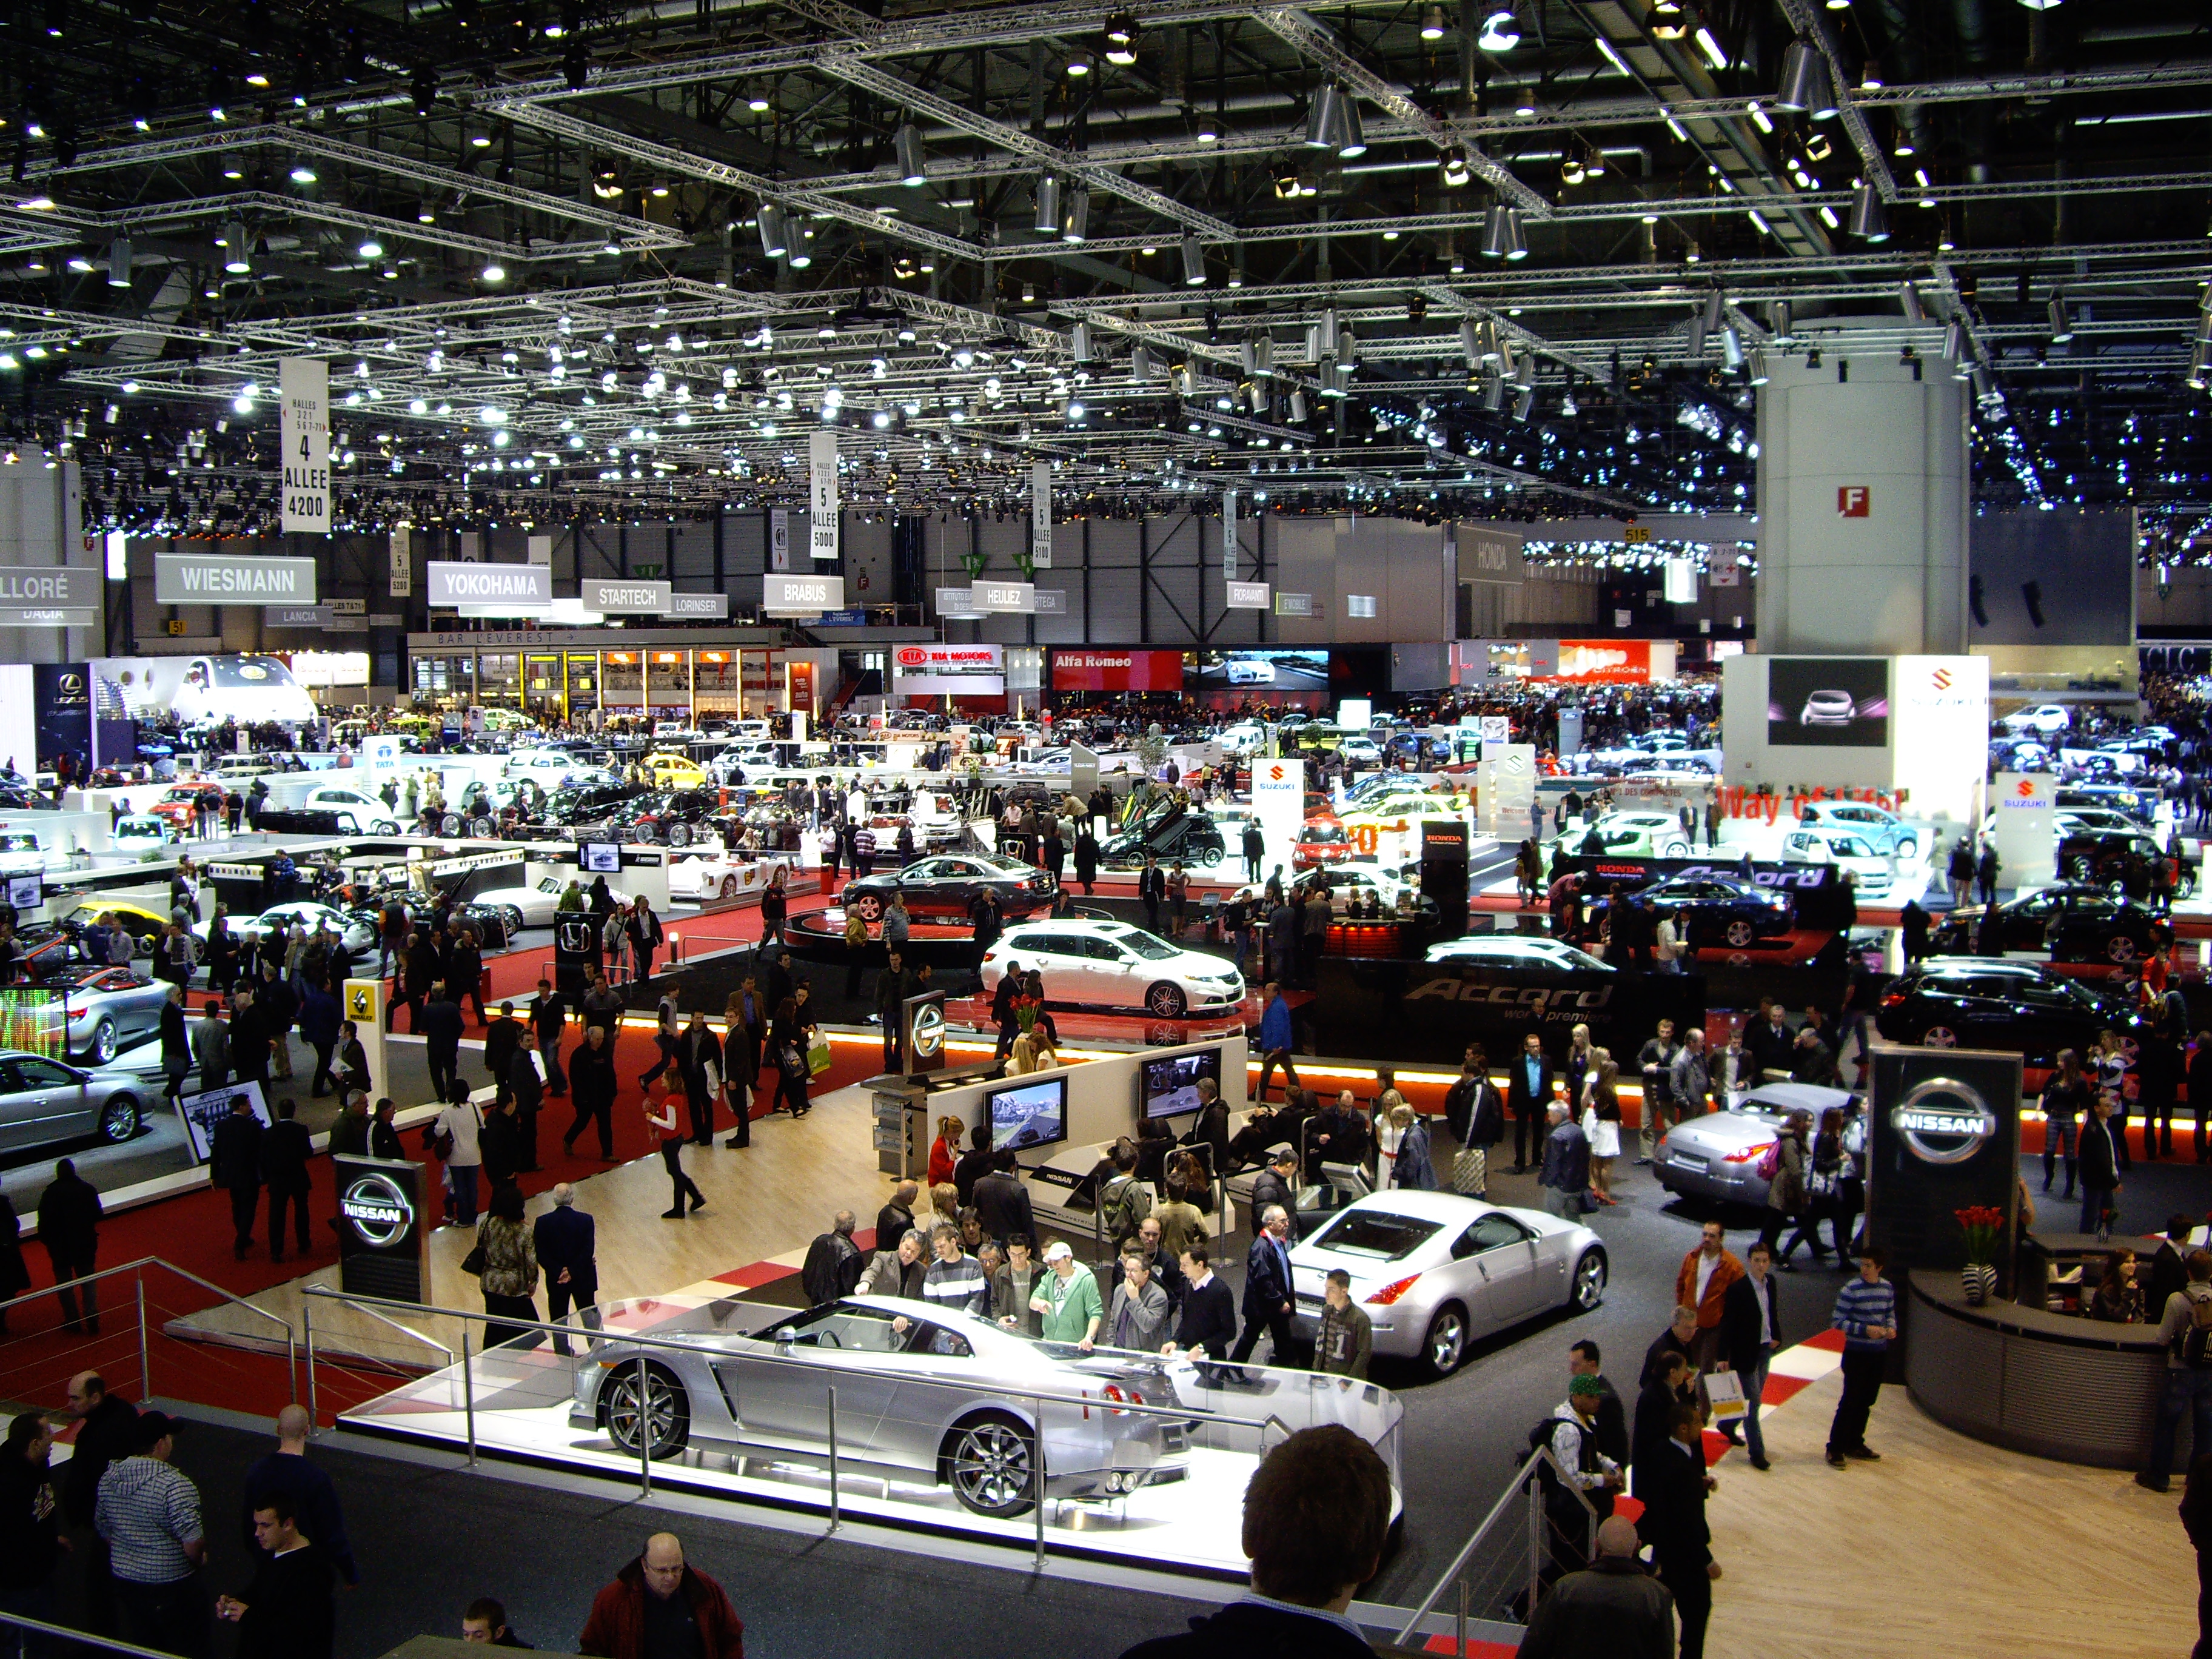 Super Fast Range Rover at Geneva Motor Show